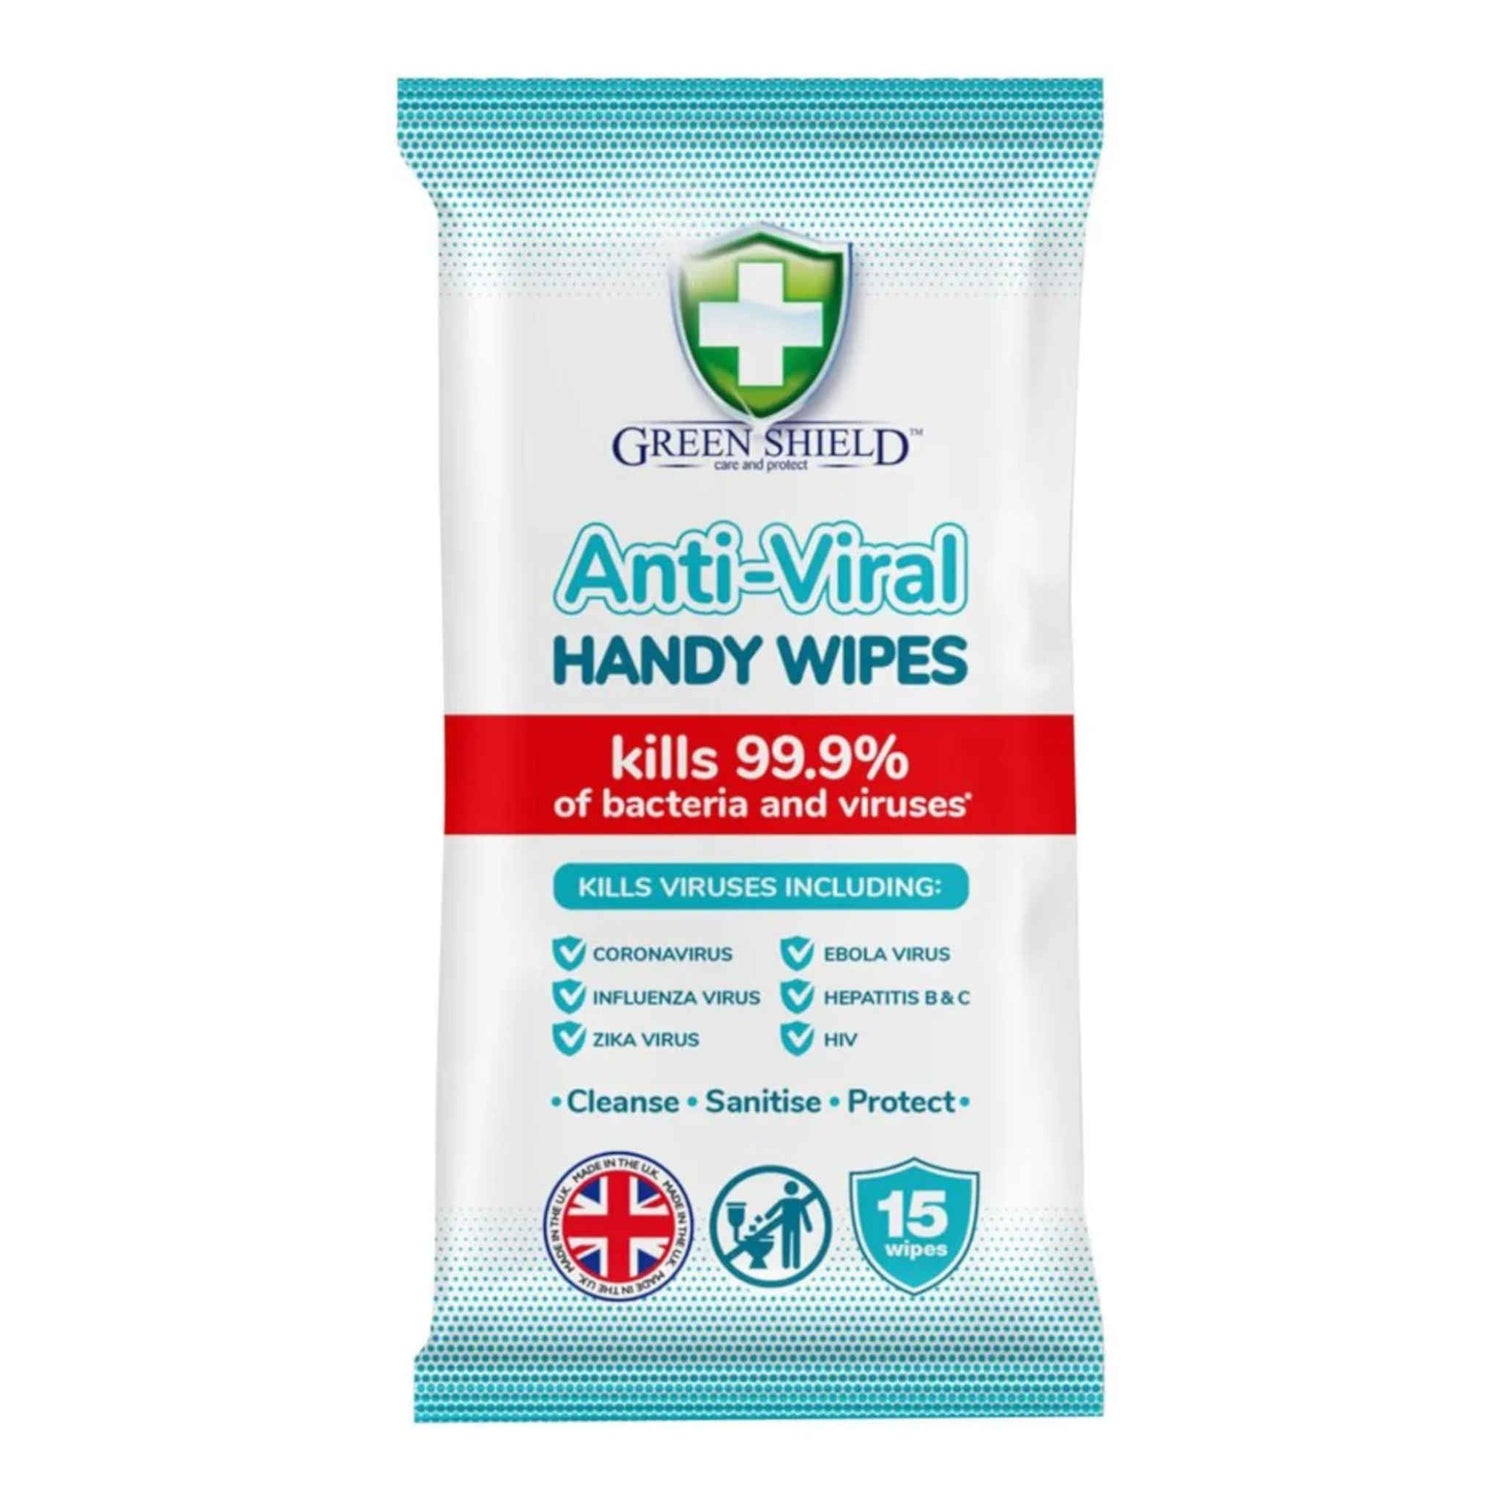 Green Shield Anti-viral Handy Wipes | 15 Pack